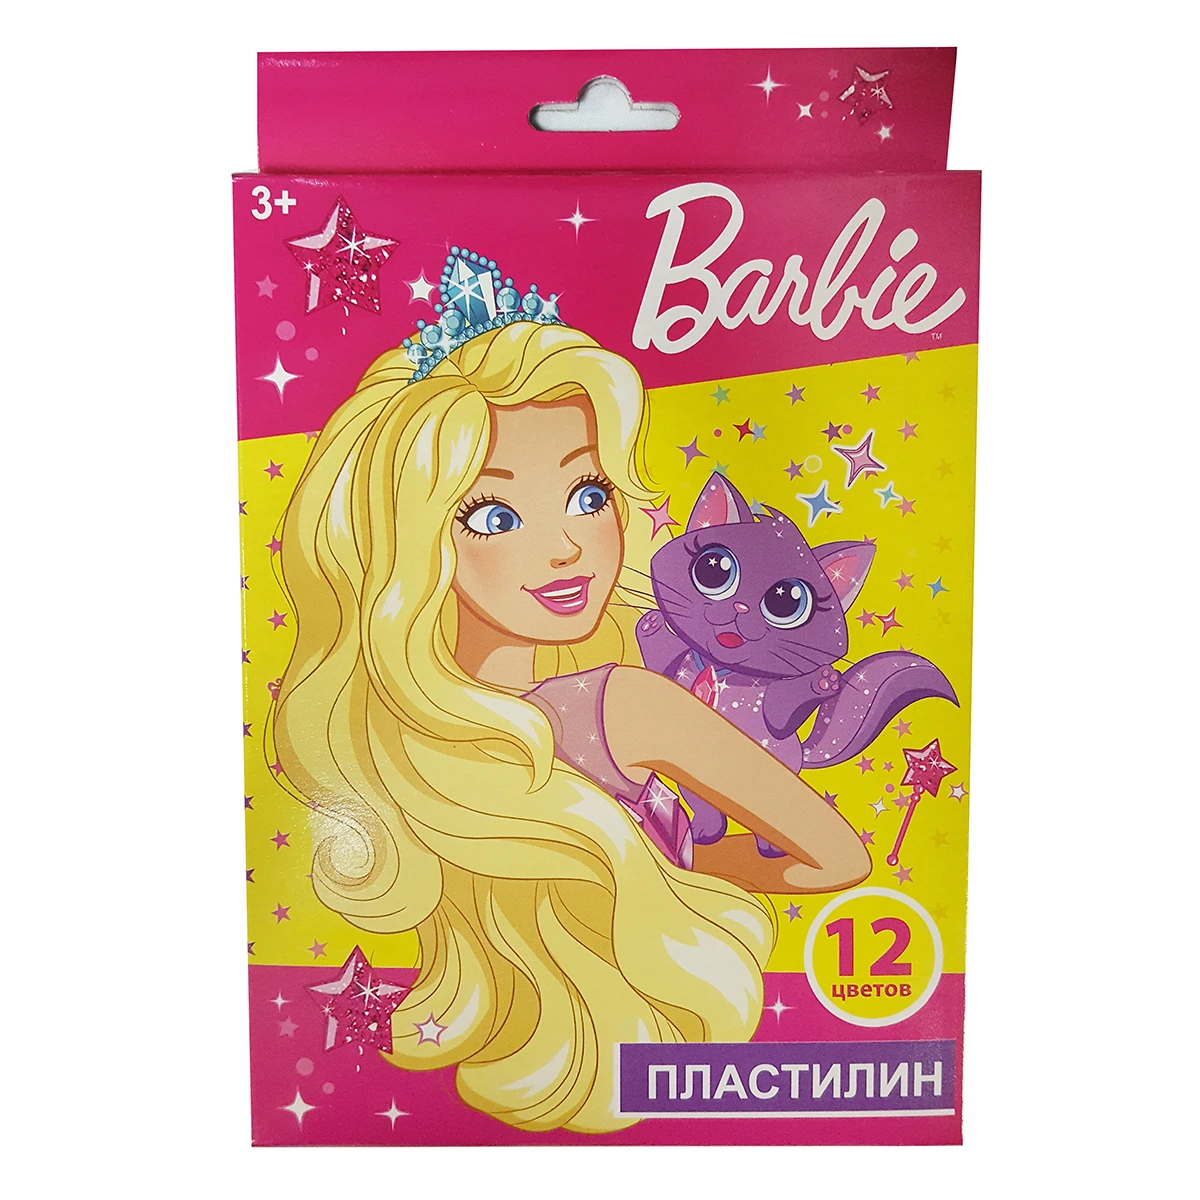 90156 Barbie Пластилин 12цв., 240г, стека пластик., картон. уп. с европодвесом